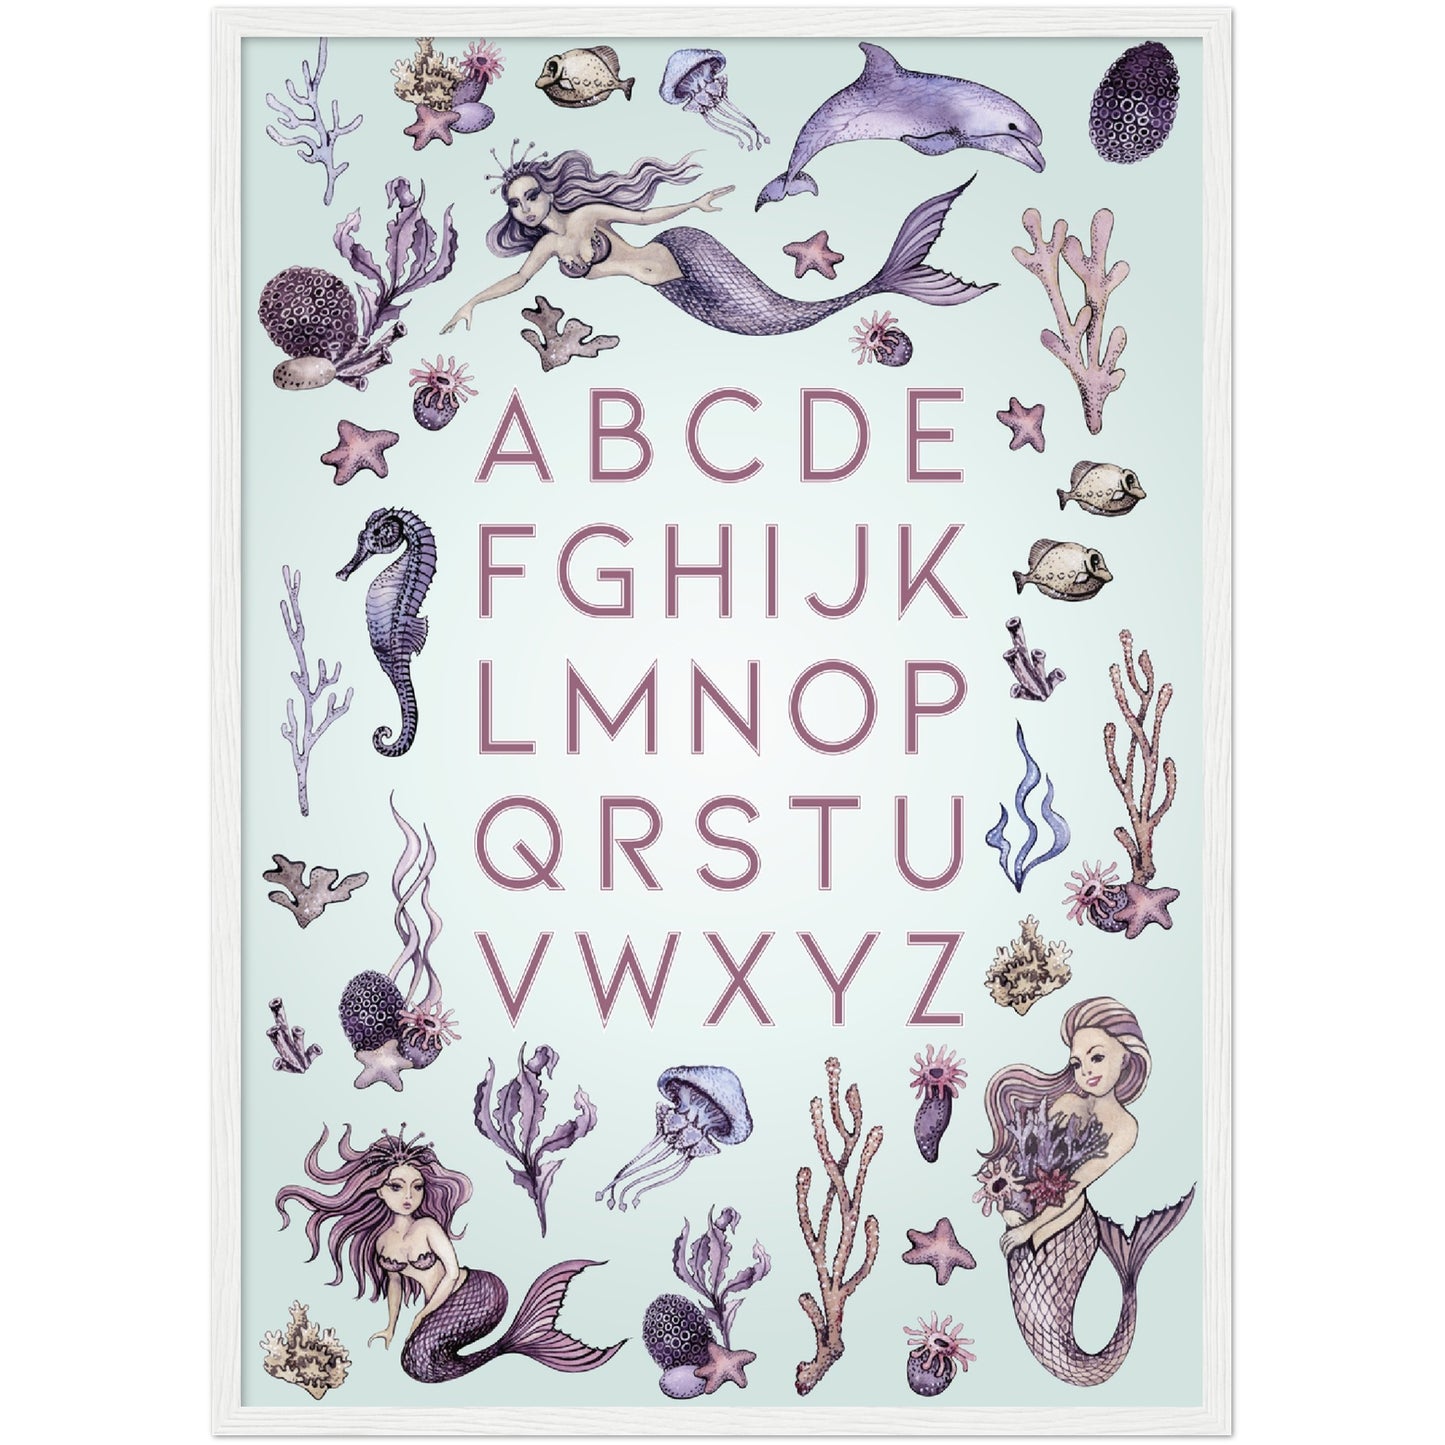 ABC Alphabet With Mermaids Print